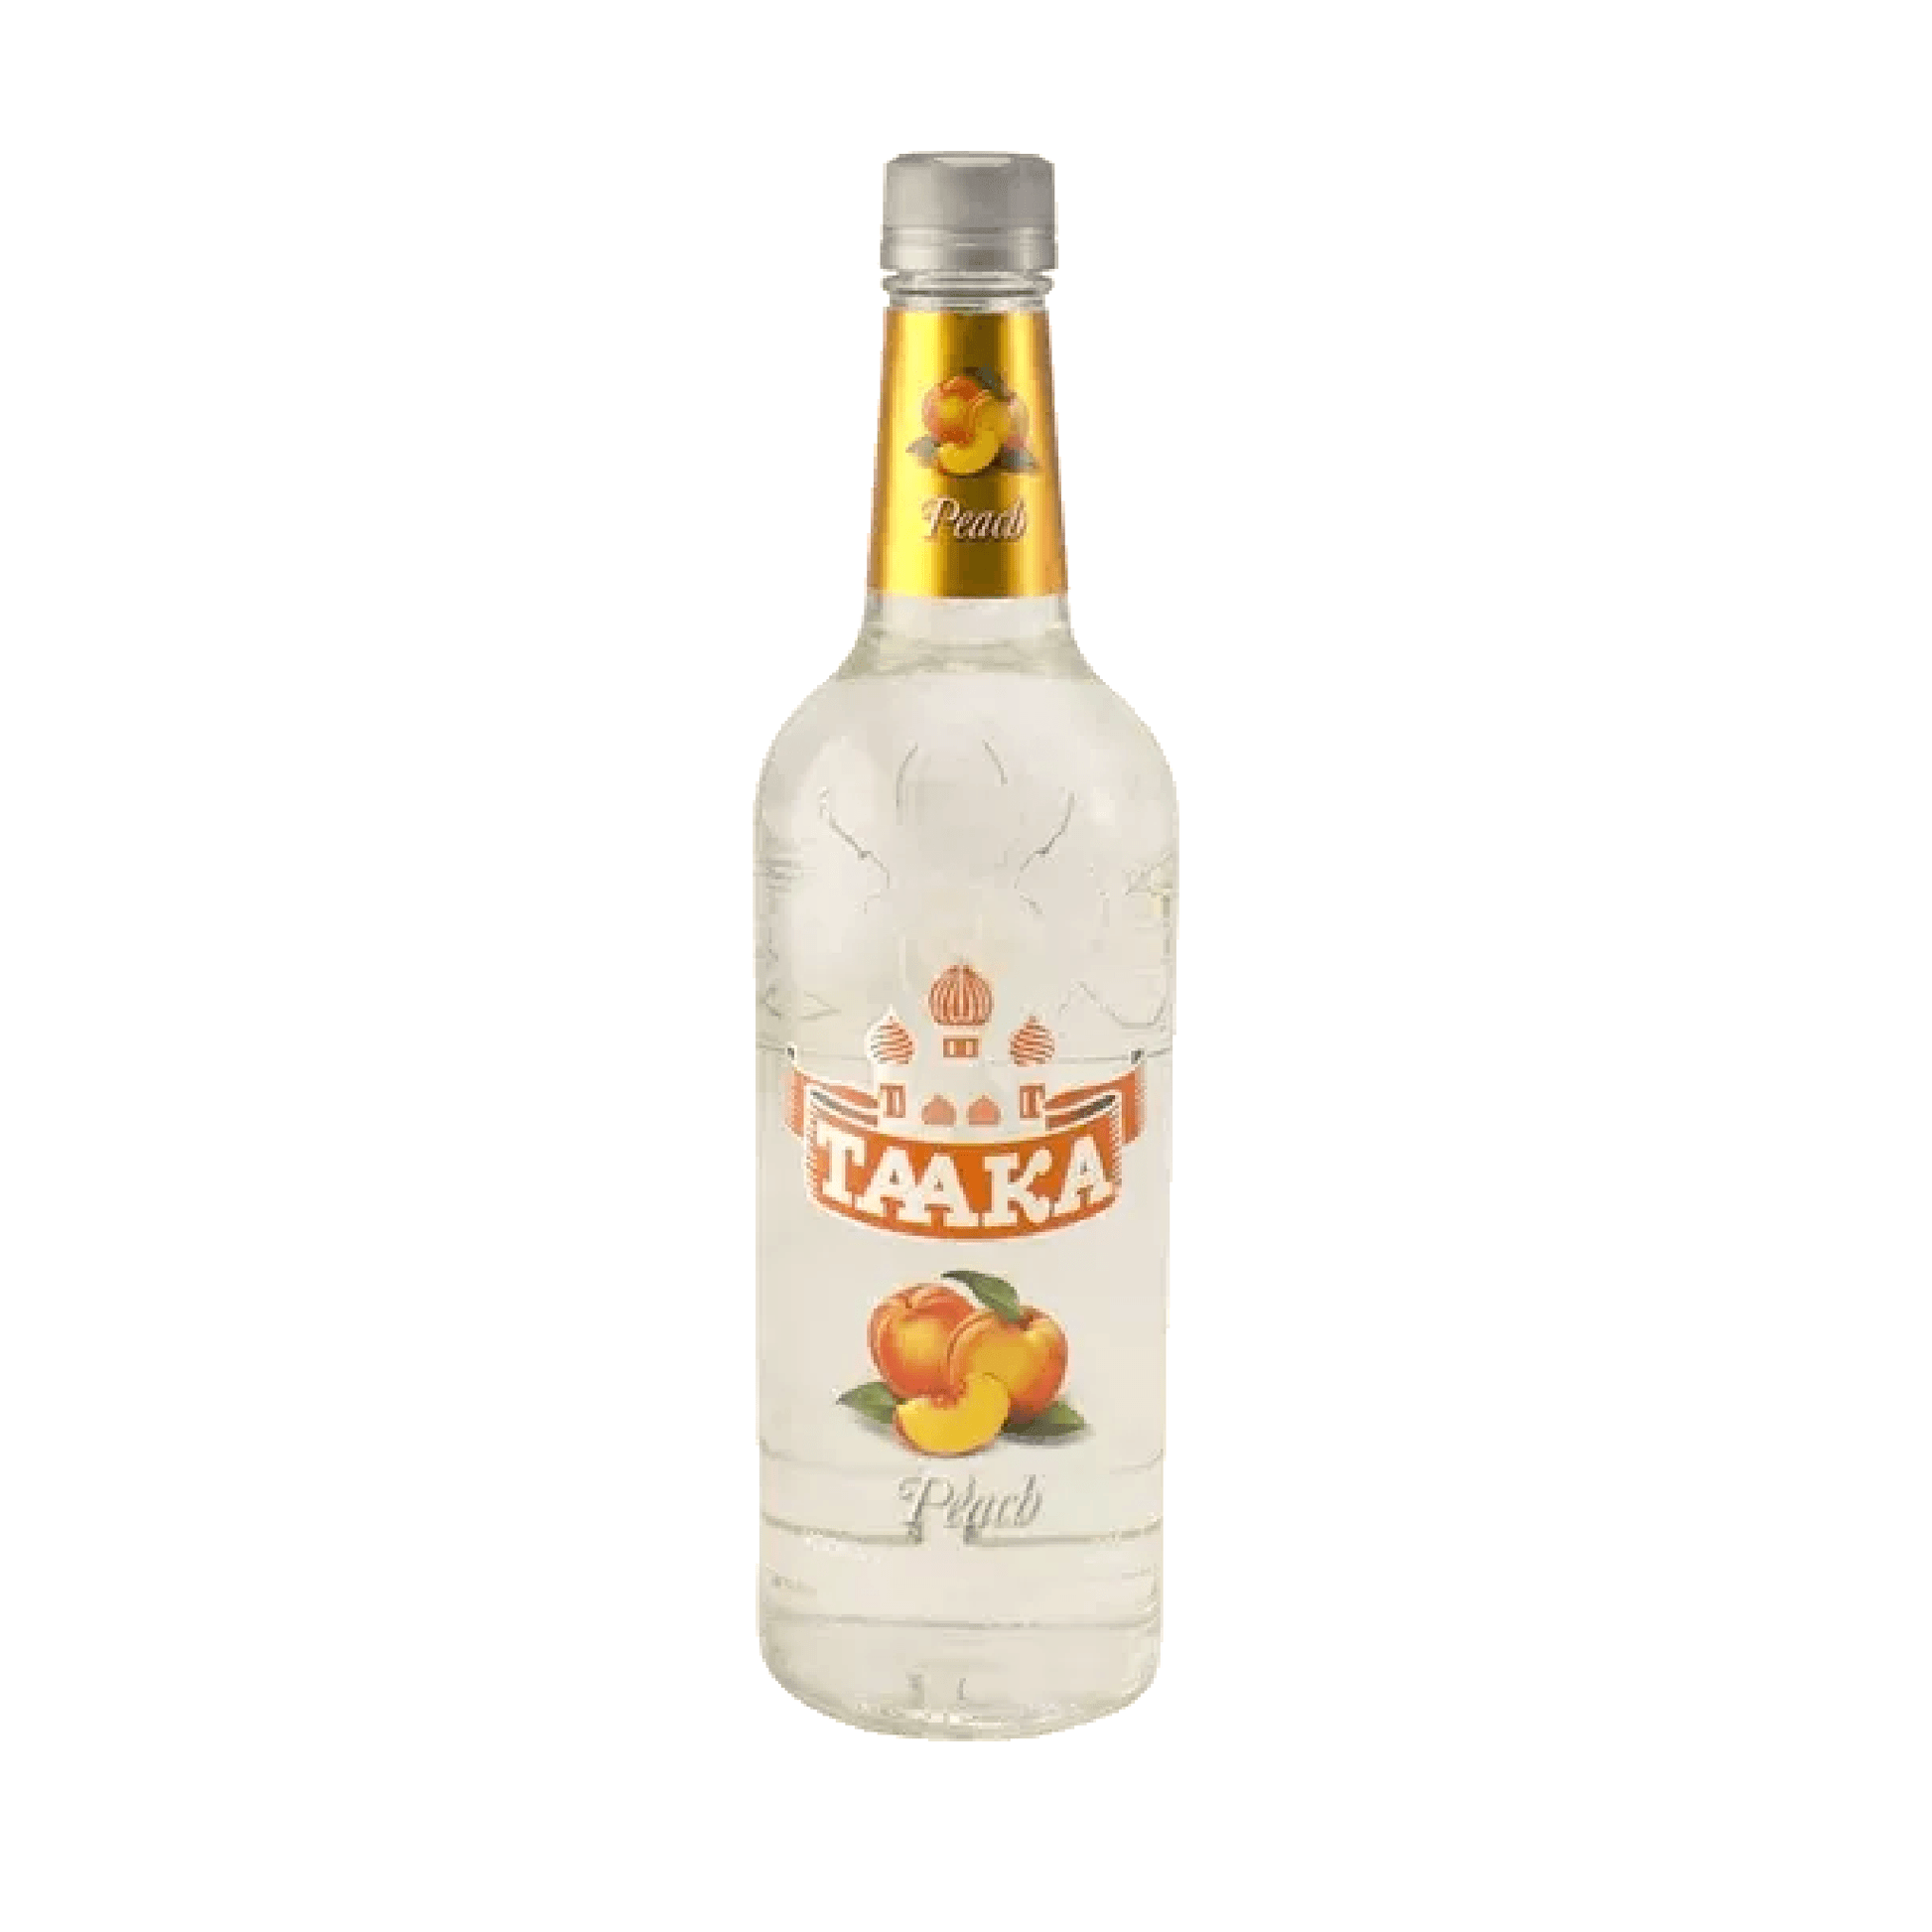 Taaka Peach Vodka - Liquor Geeks